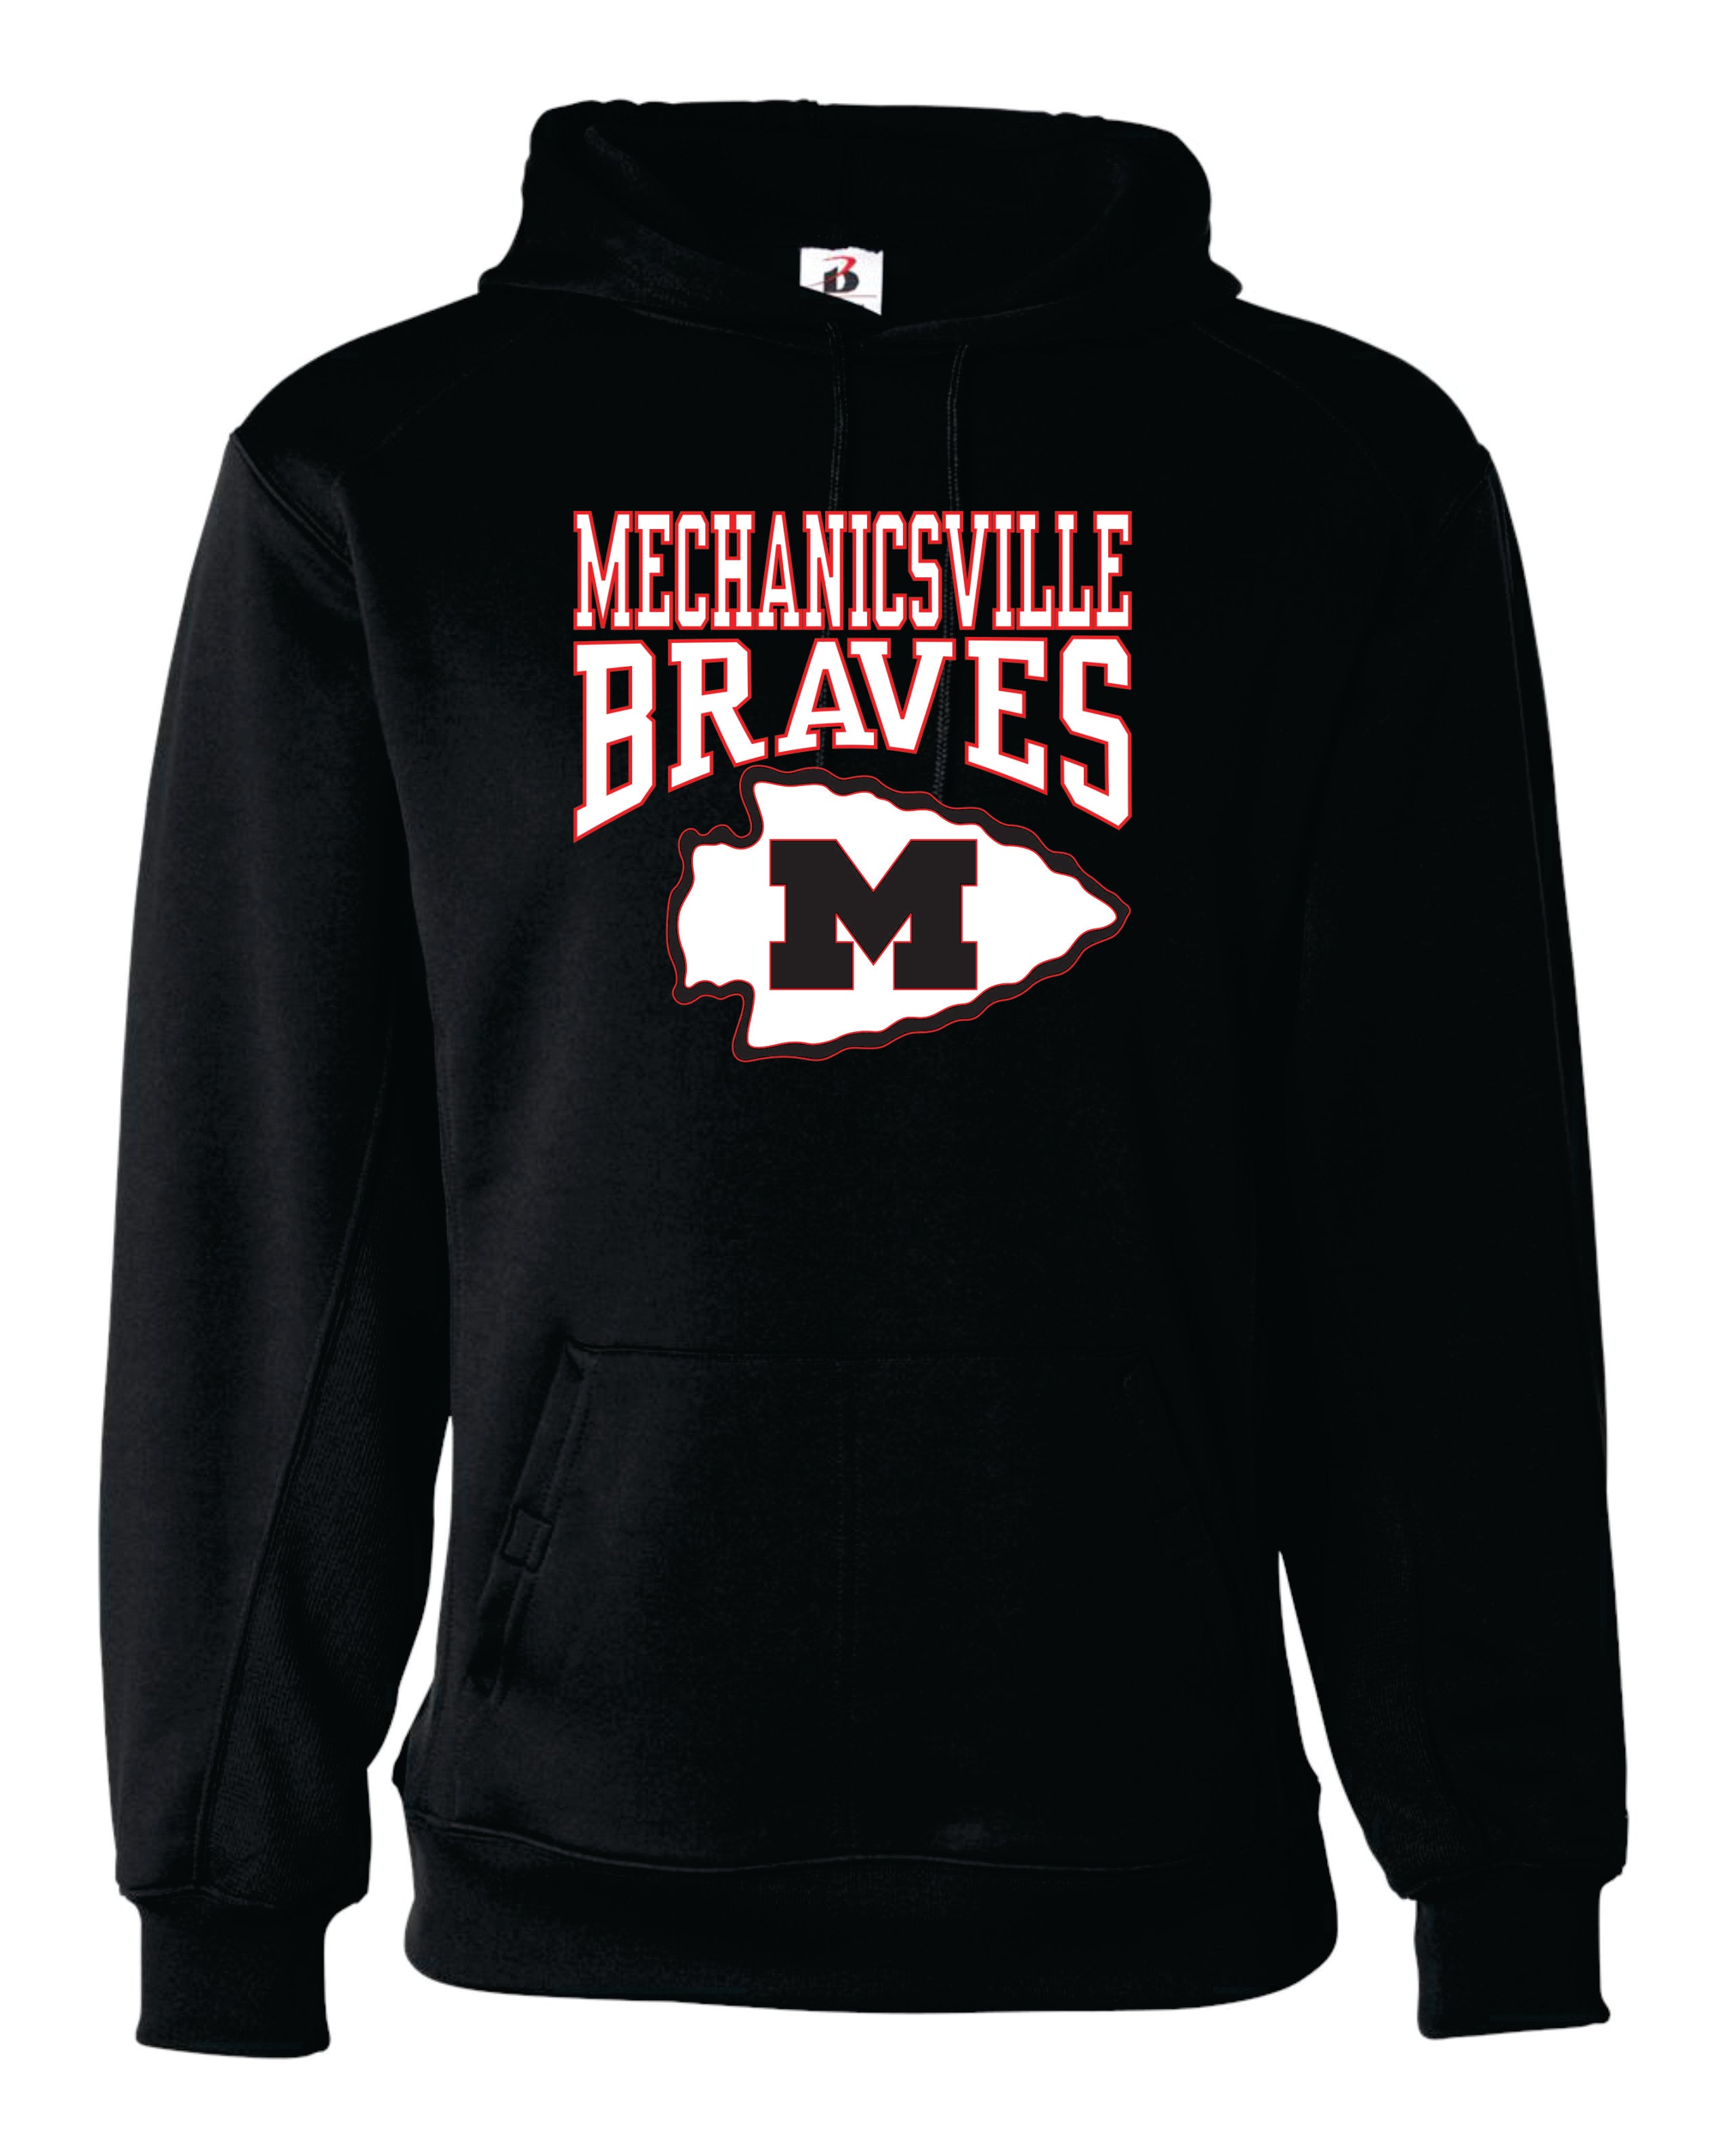 Mechanicsville Braves Badger Dri-fit Hoodie